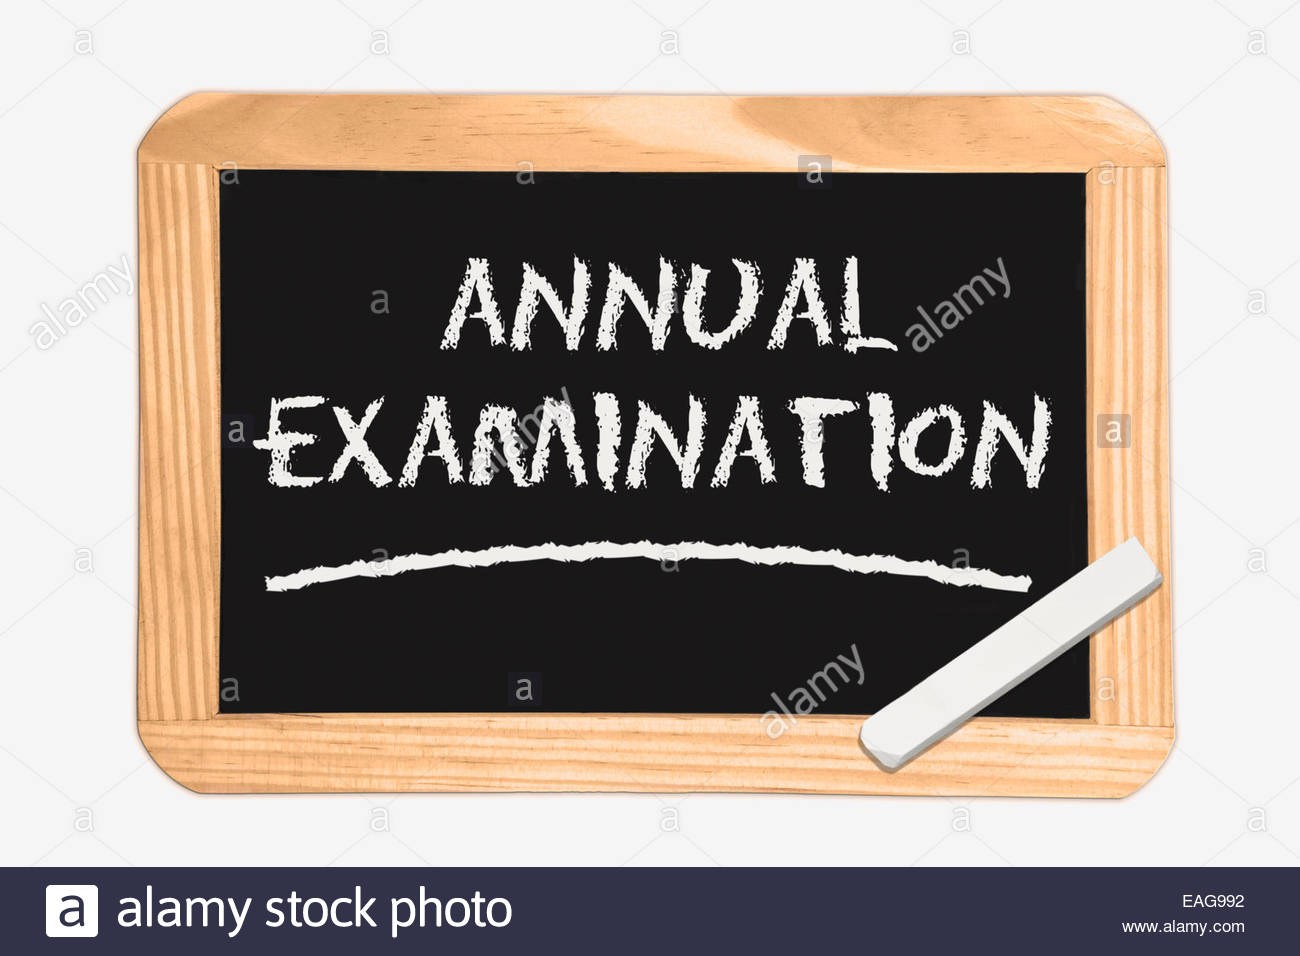 Annual Examination, 2017